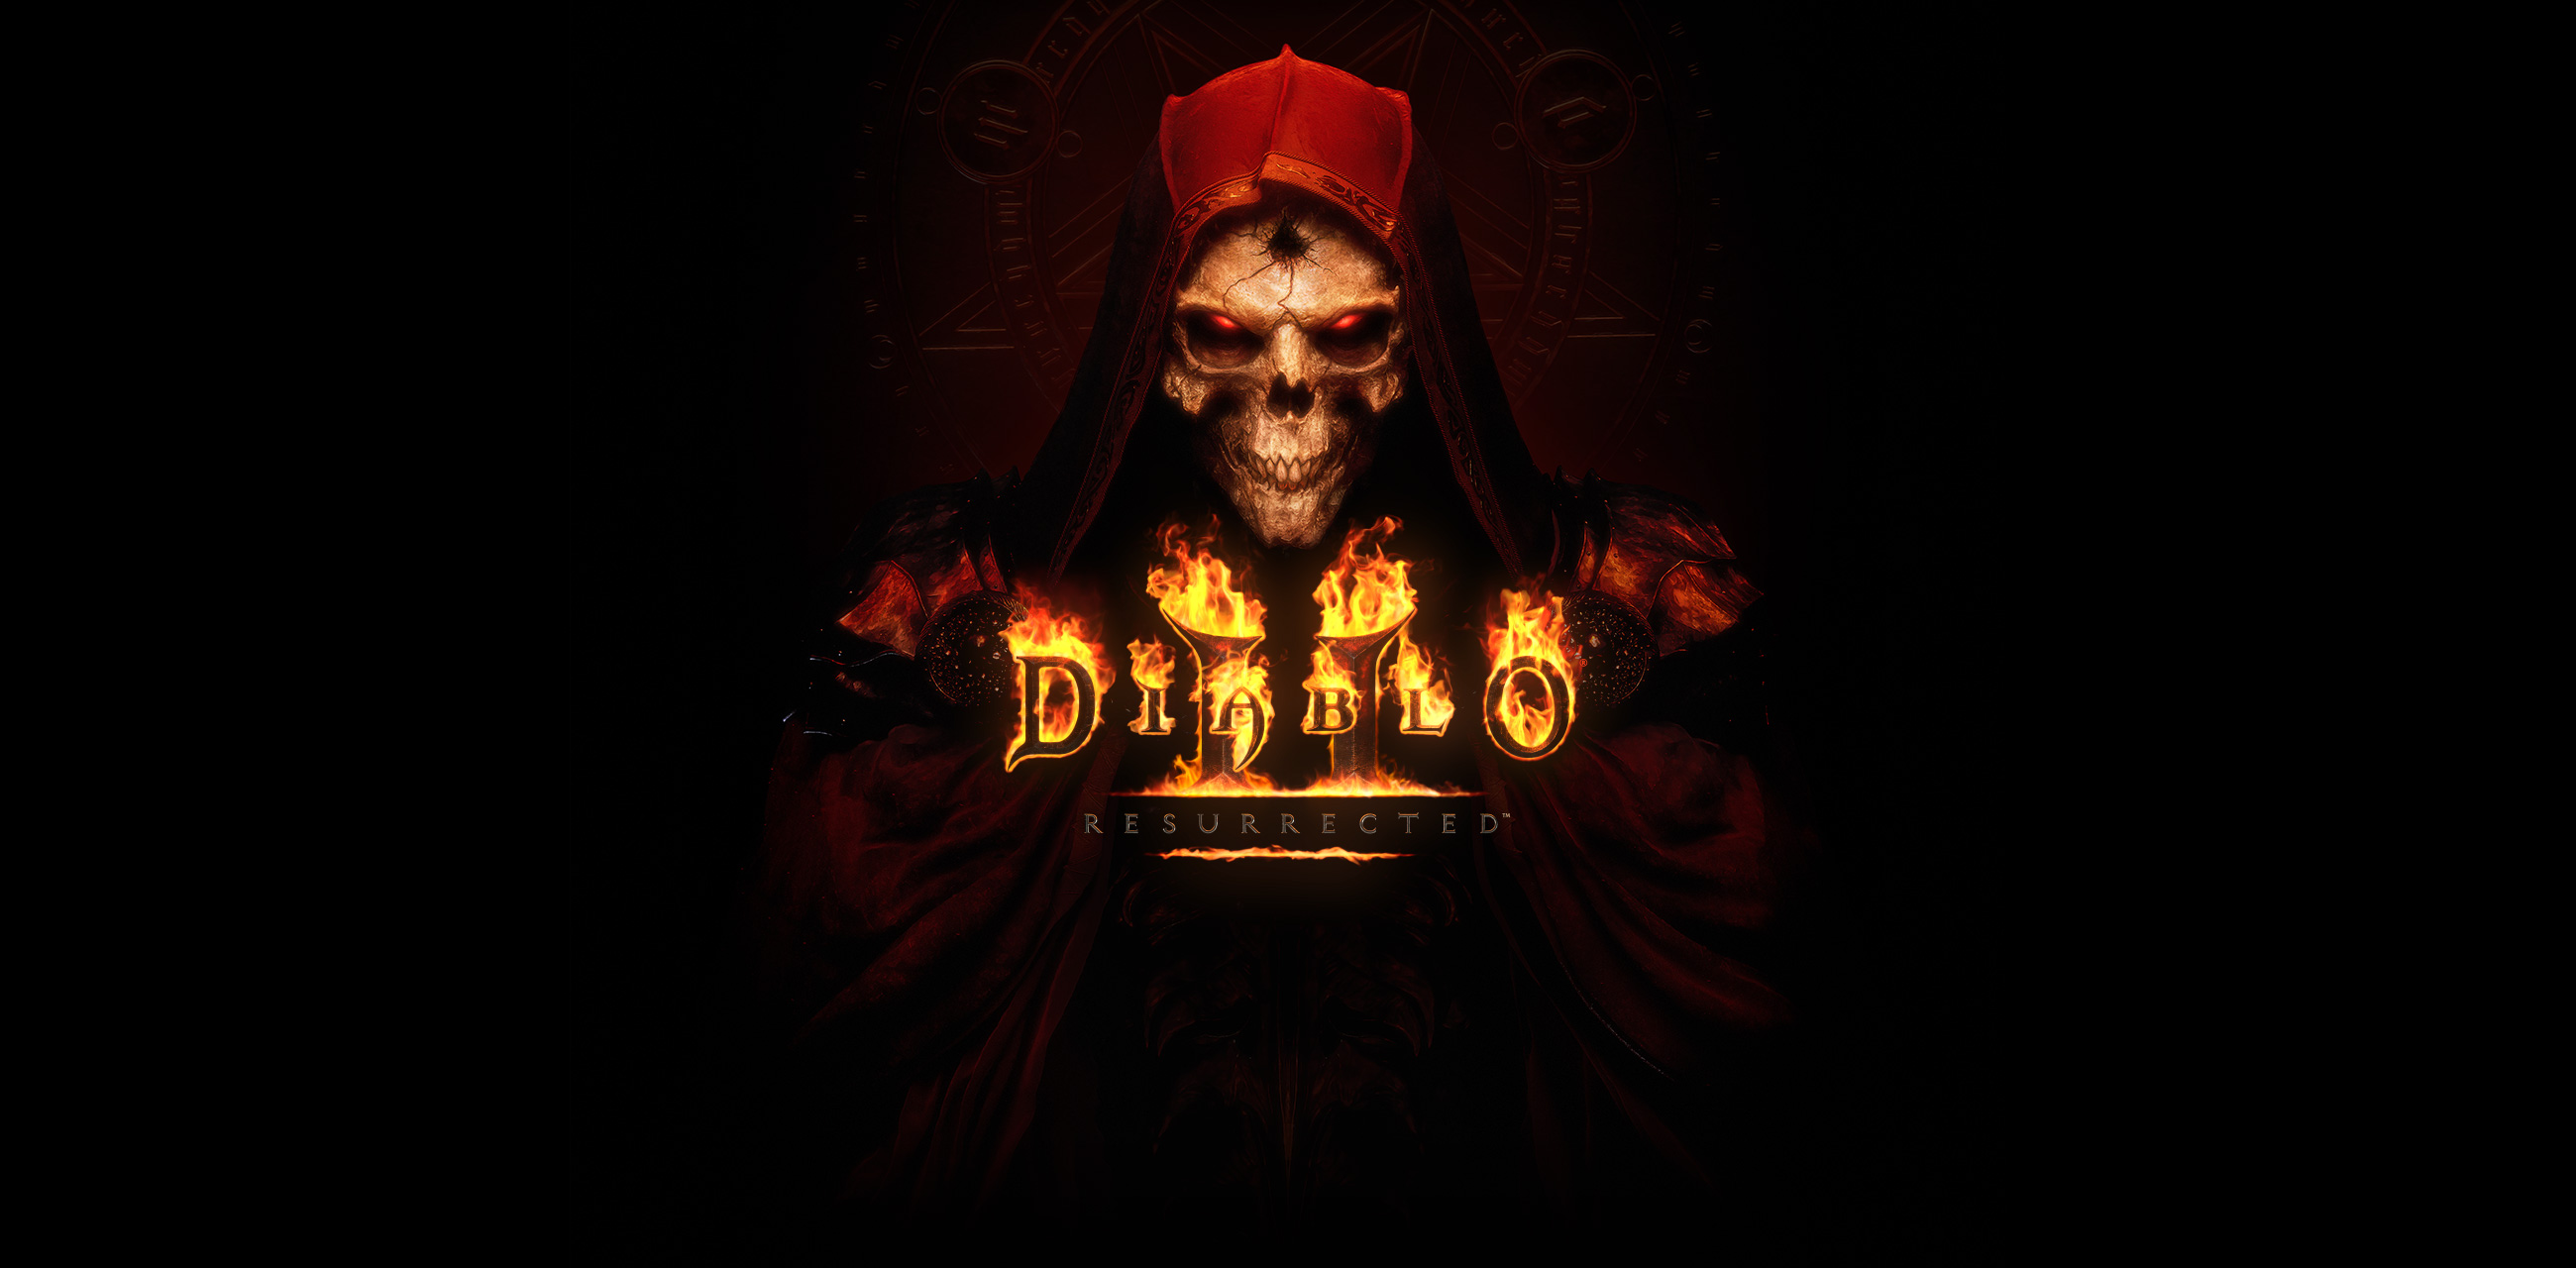 Завантажити шпалери Diablo Ii: Resurrected на телефон безкоштовно